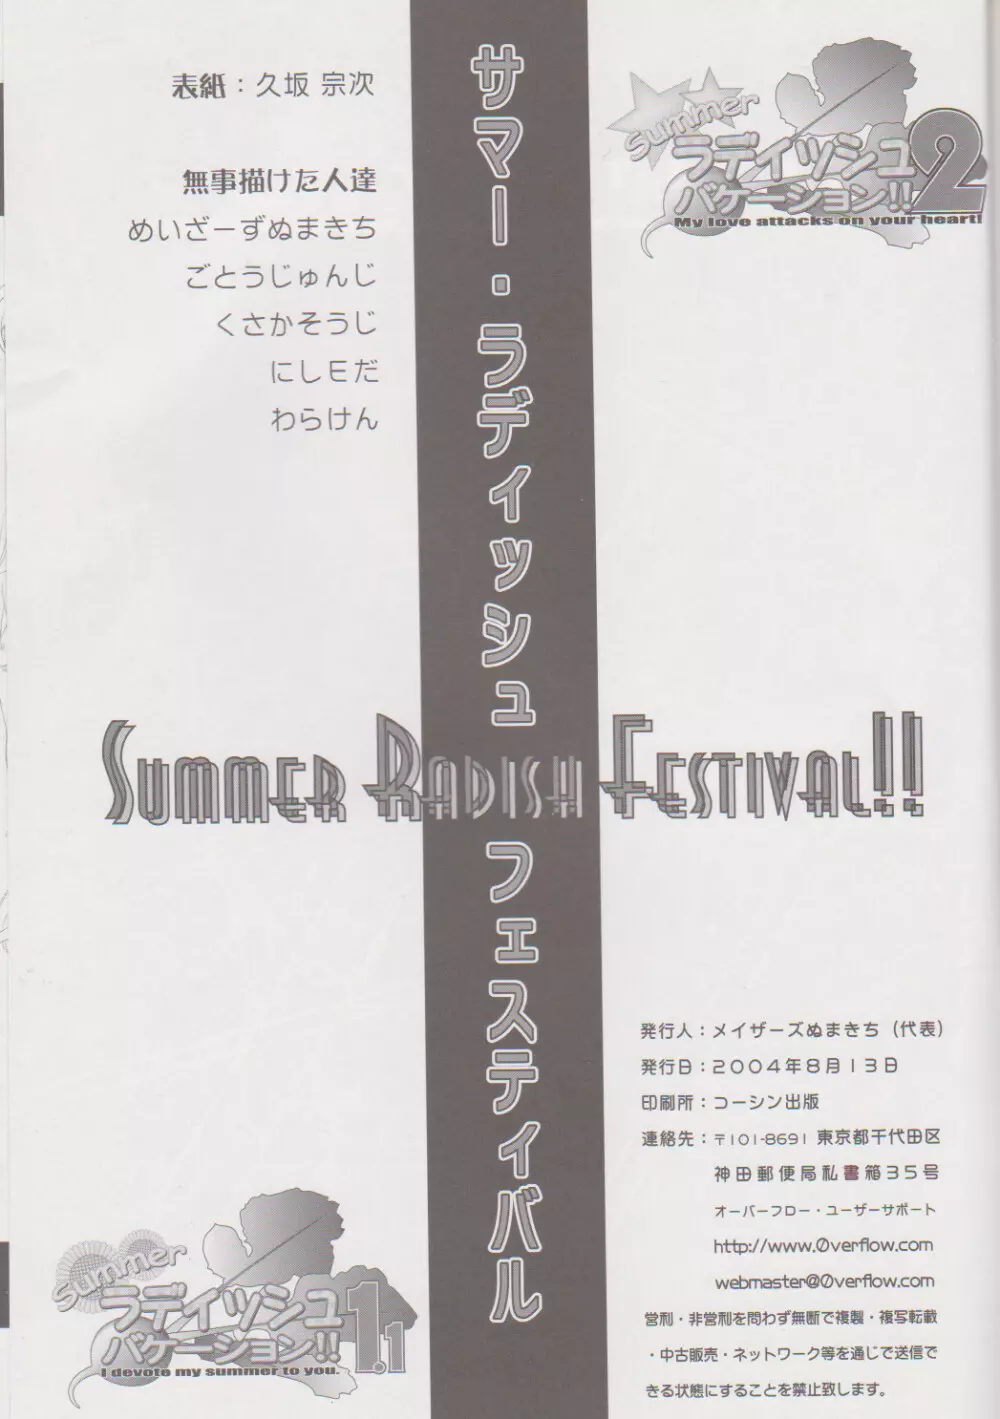 Summer Radish Festival!! オーバーフロー・オフィシャルファンブック２ 18ページ